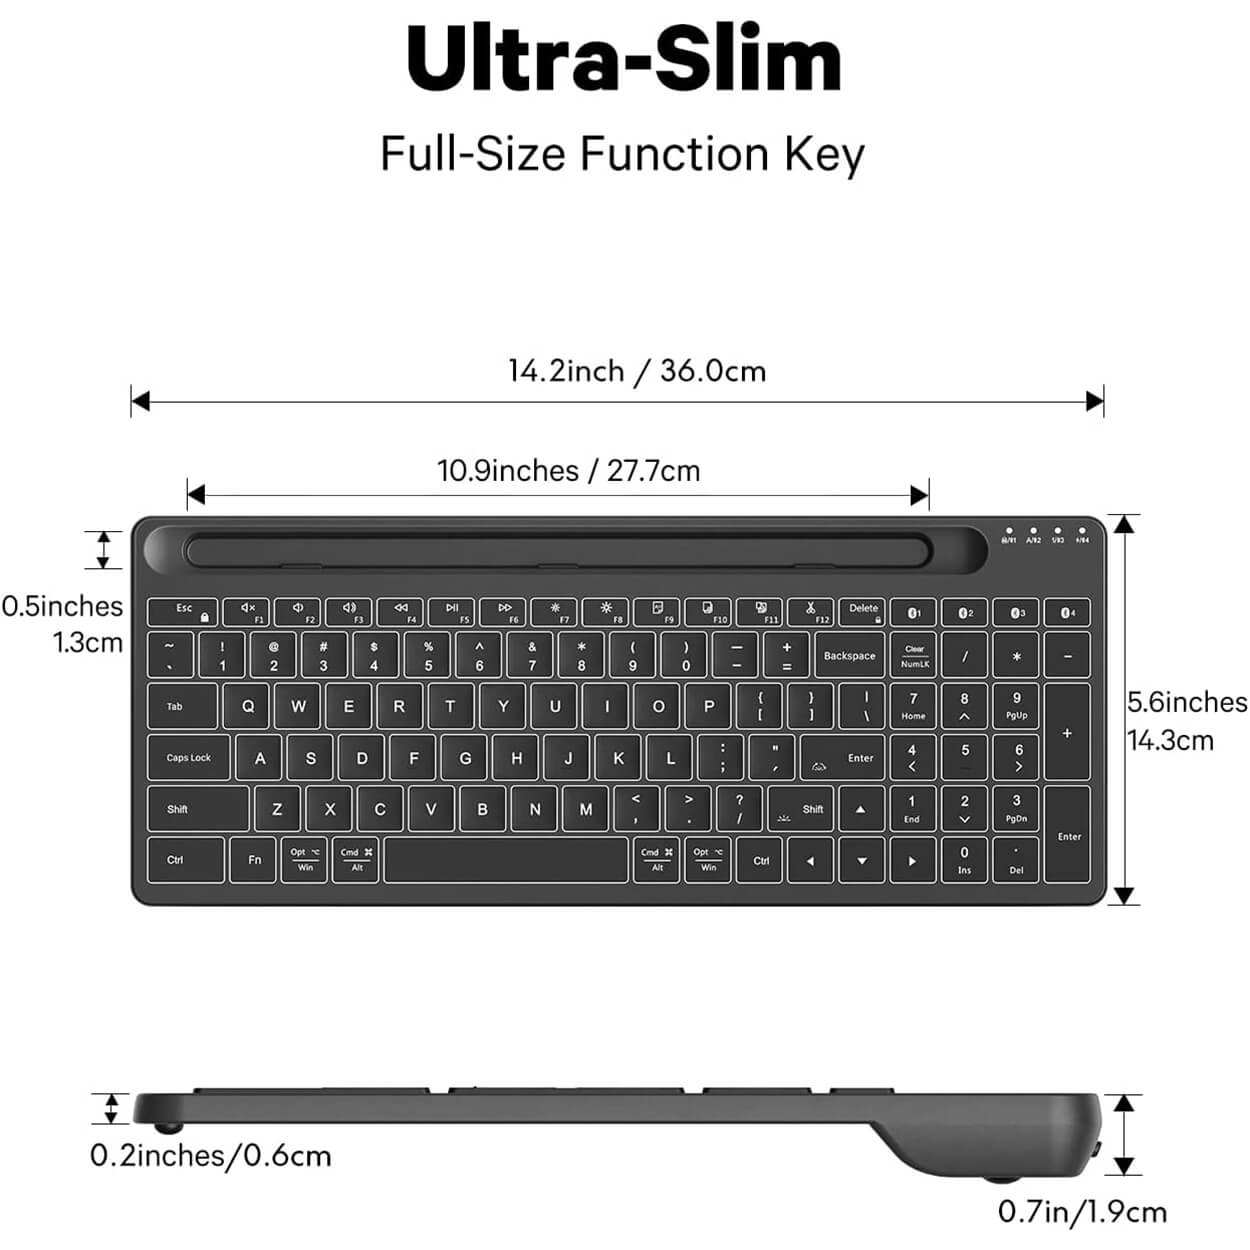 Sizes_of_Chesona_founder1_keyboard